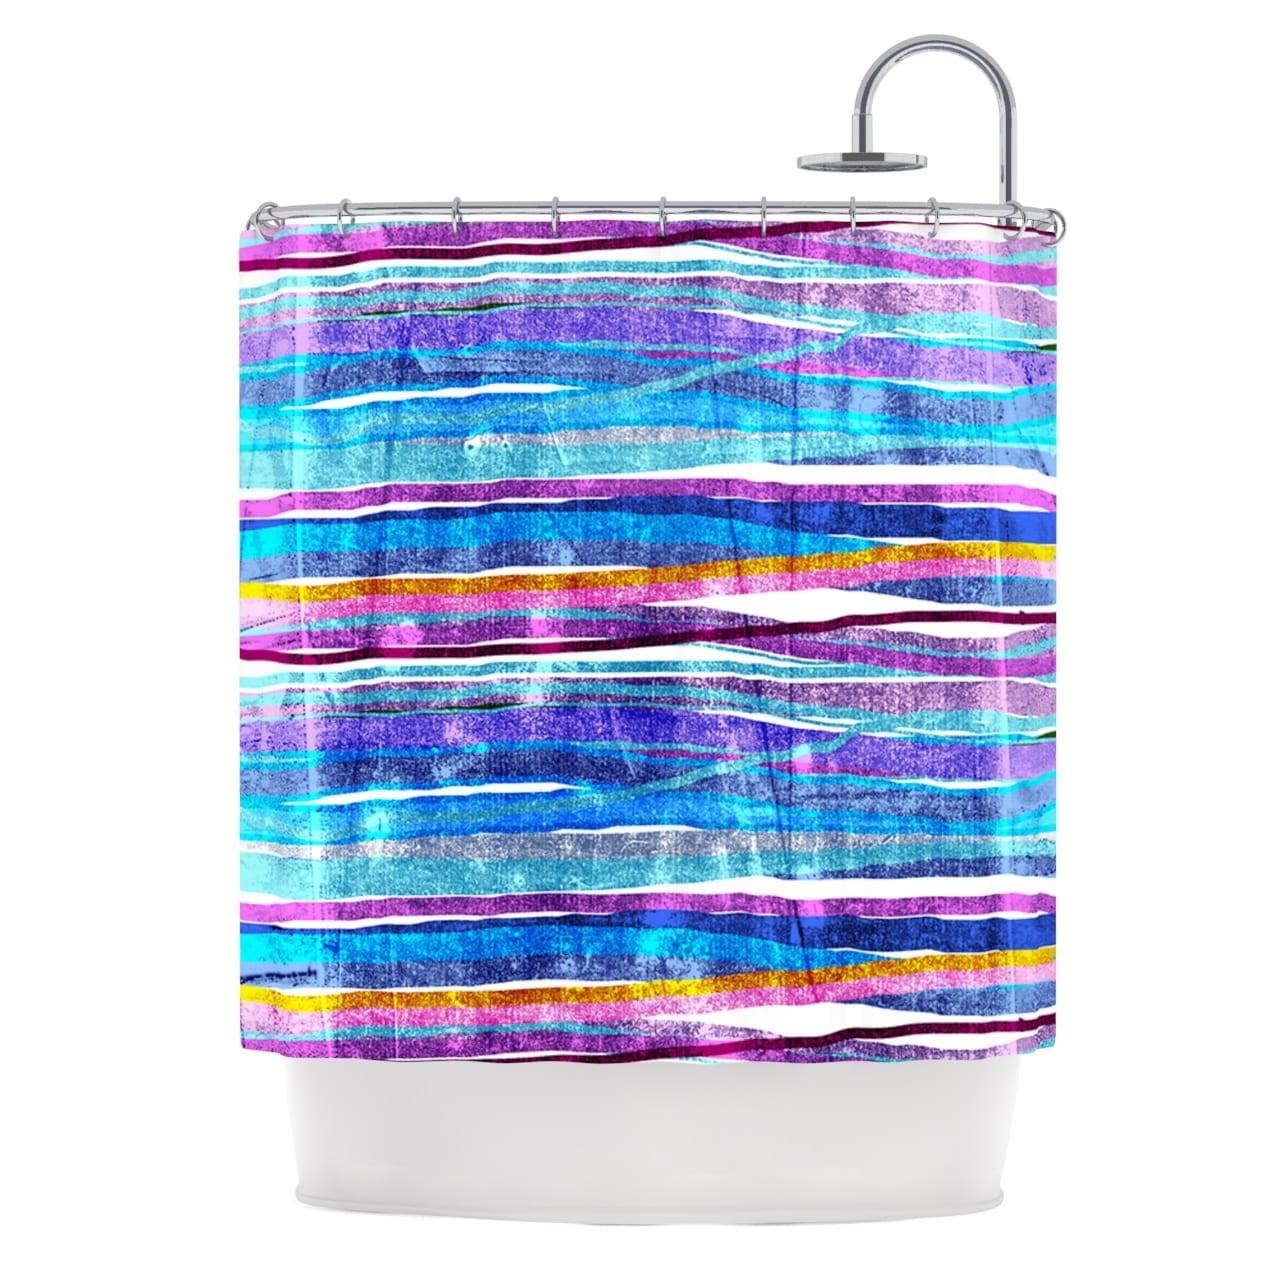 Kess InHouse Frederic Levy-Hadida Fancy Stripes Green 69 x 70 Shower Curtain 